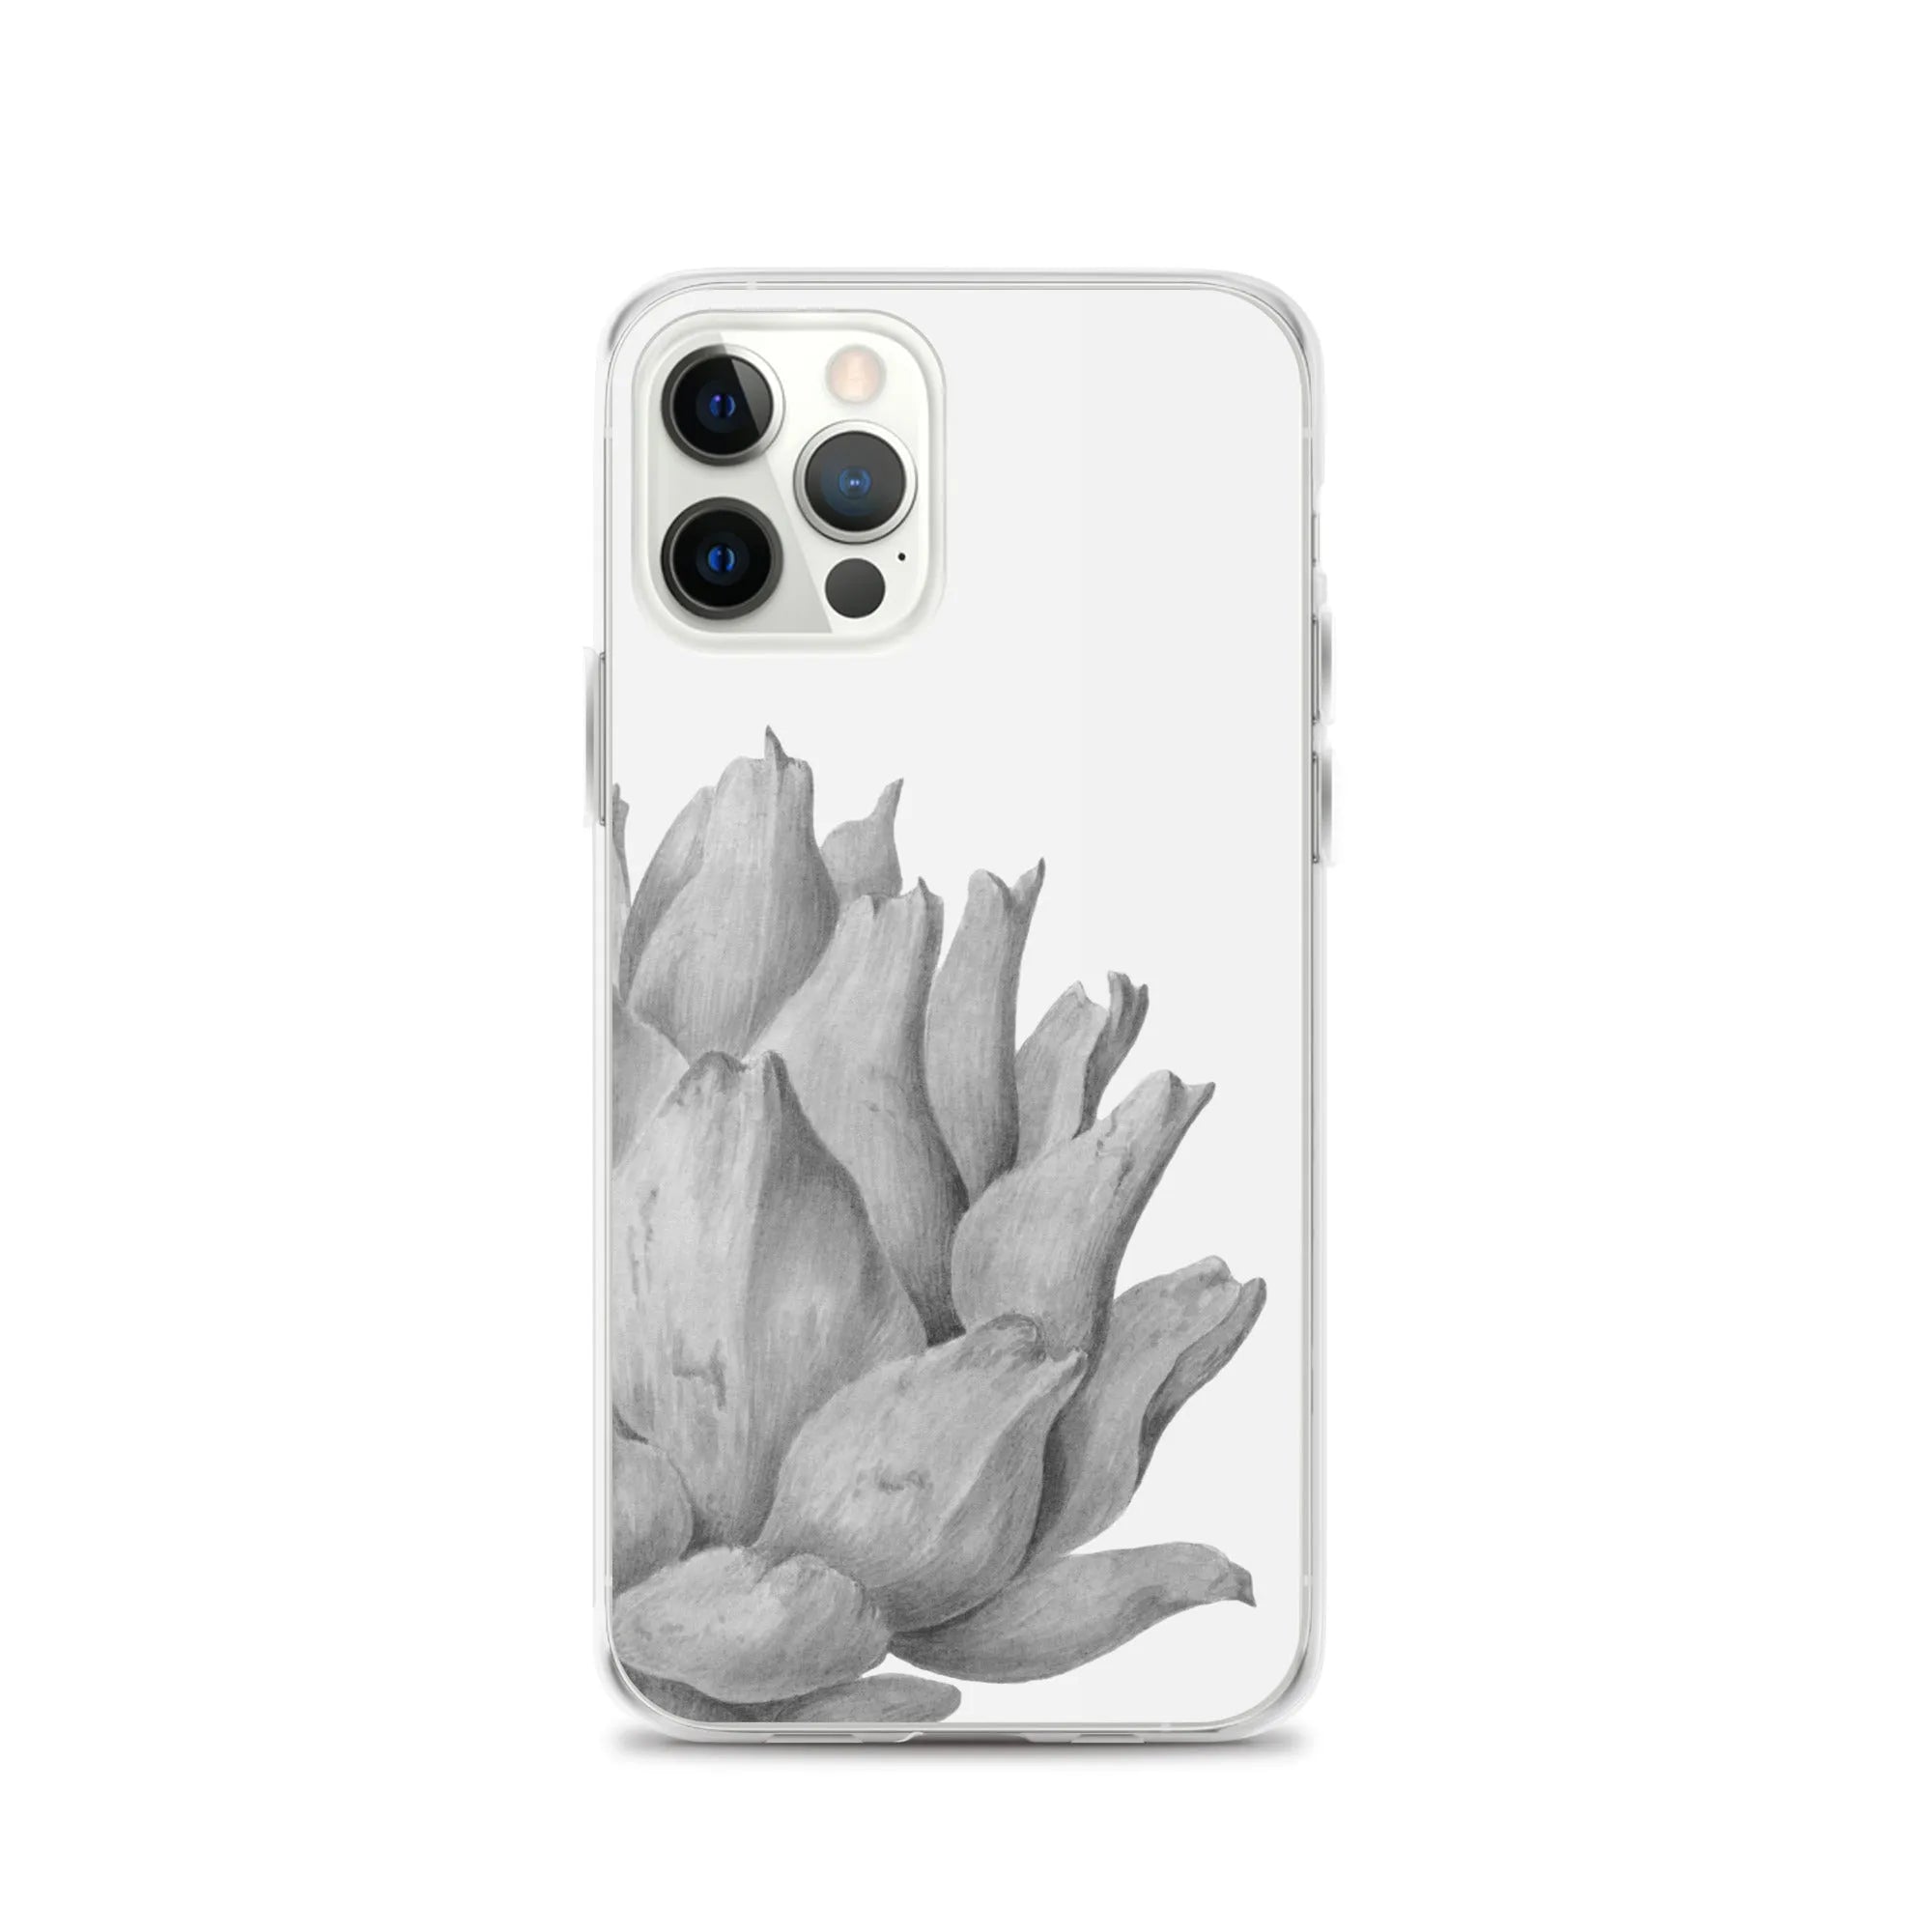 Heartichoke Botanical Art Iphone Case - Black And White - Mobile Phone Cases - Aesthetic Art